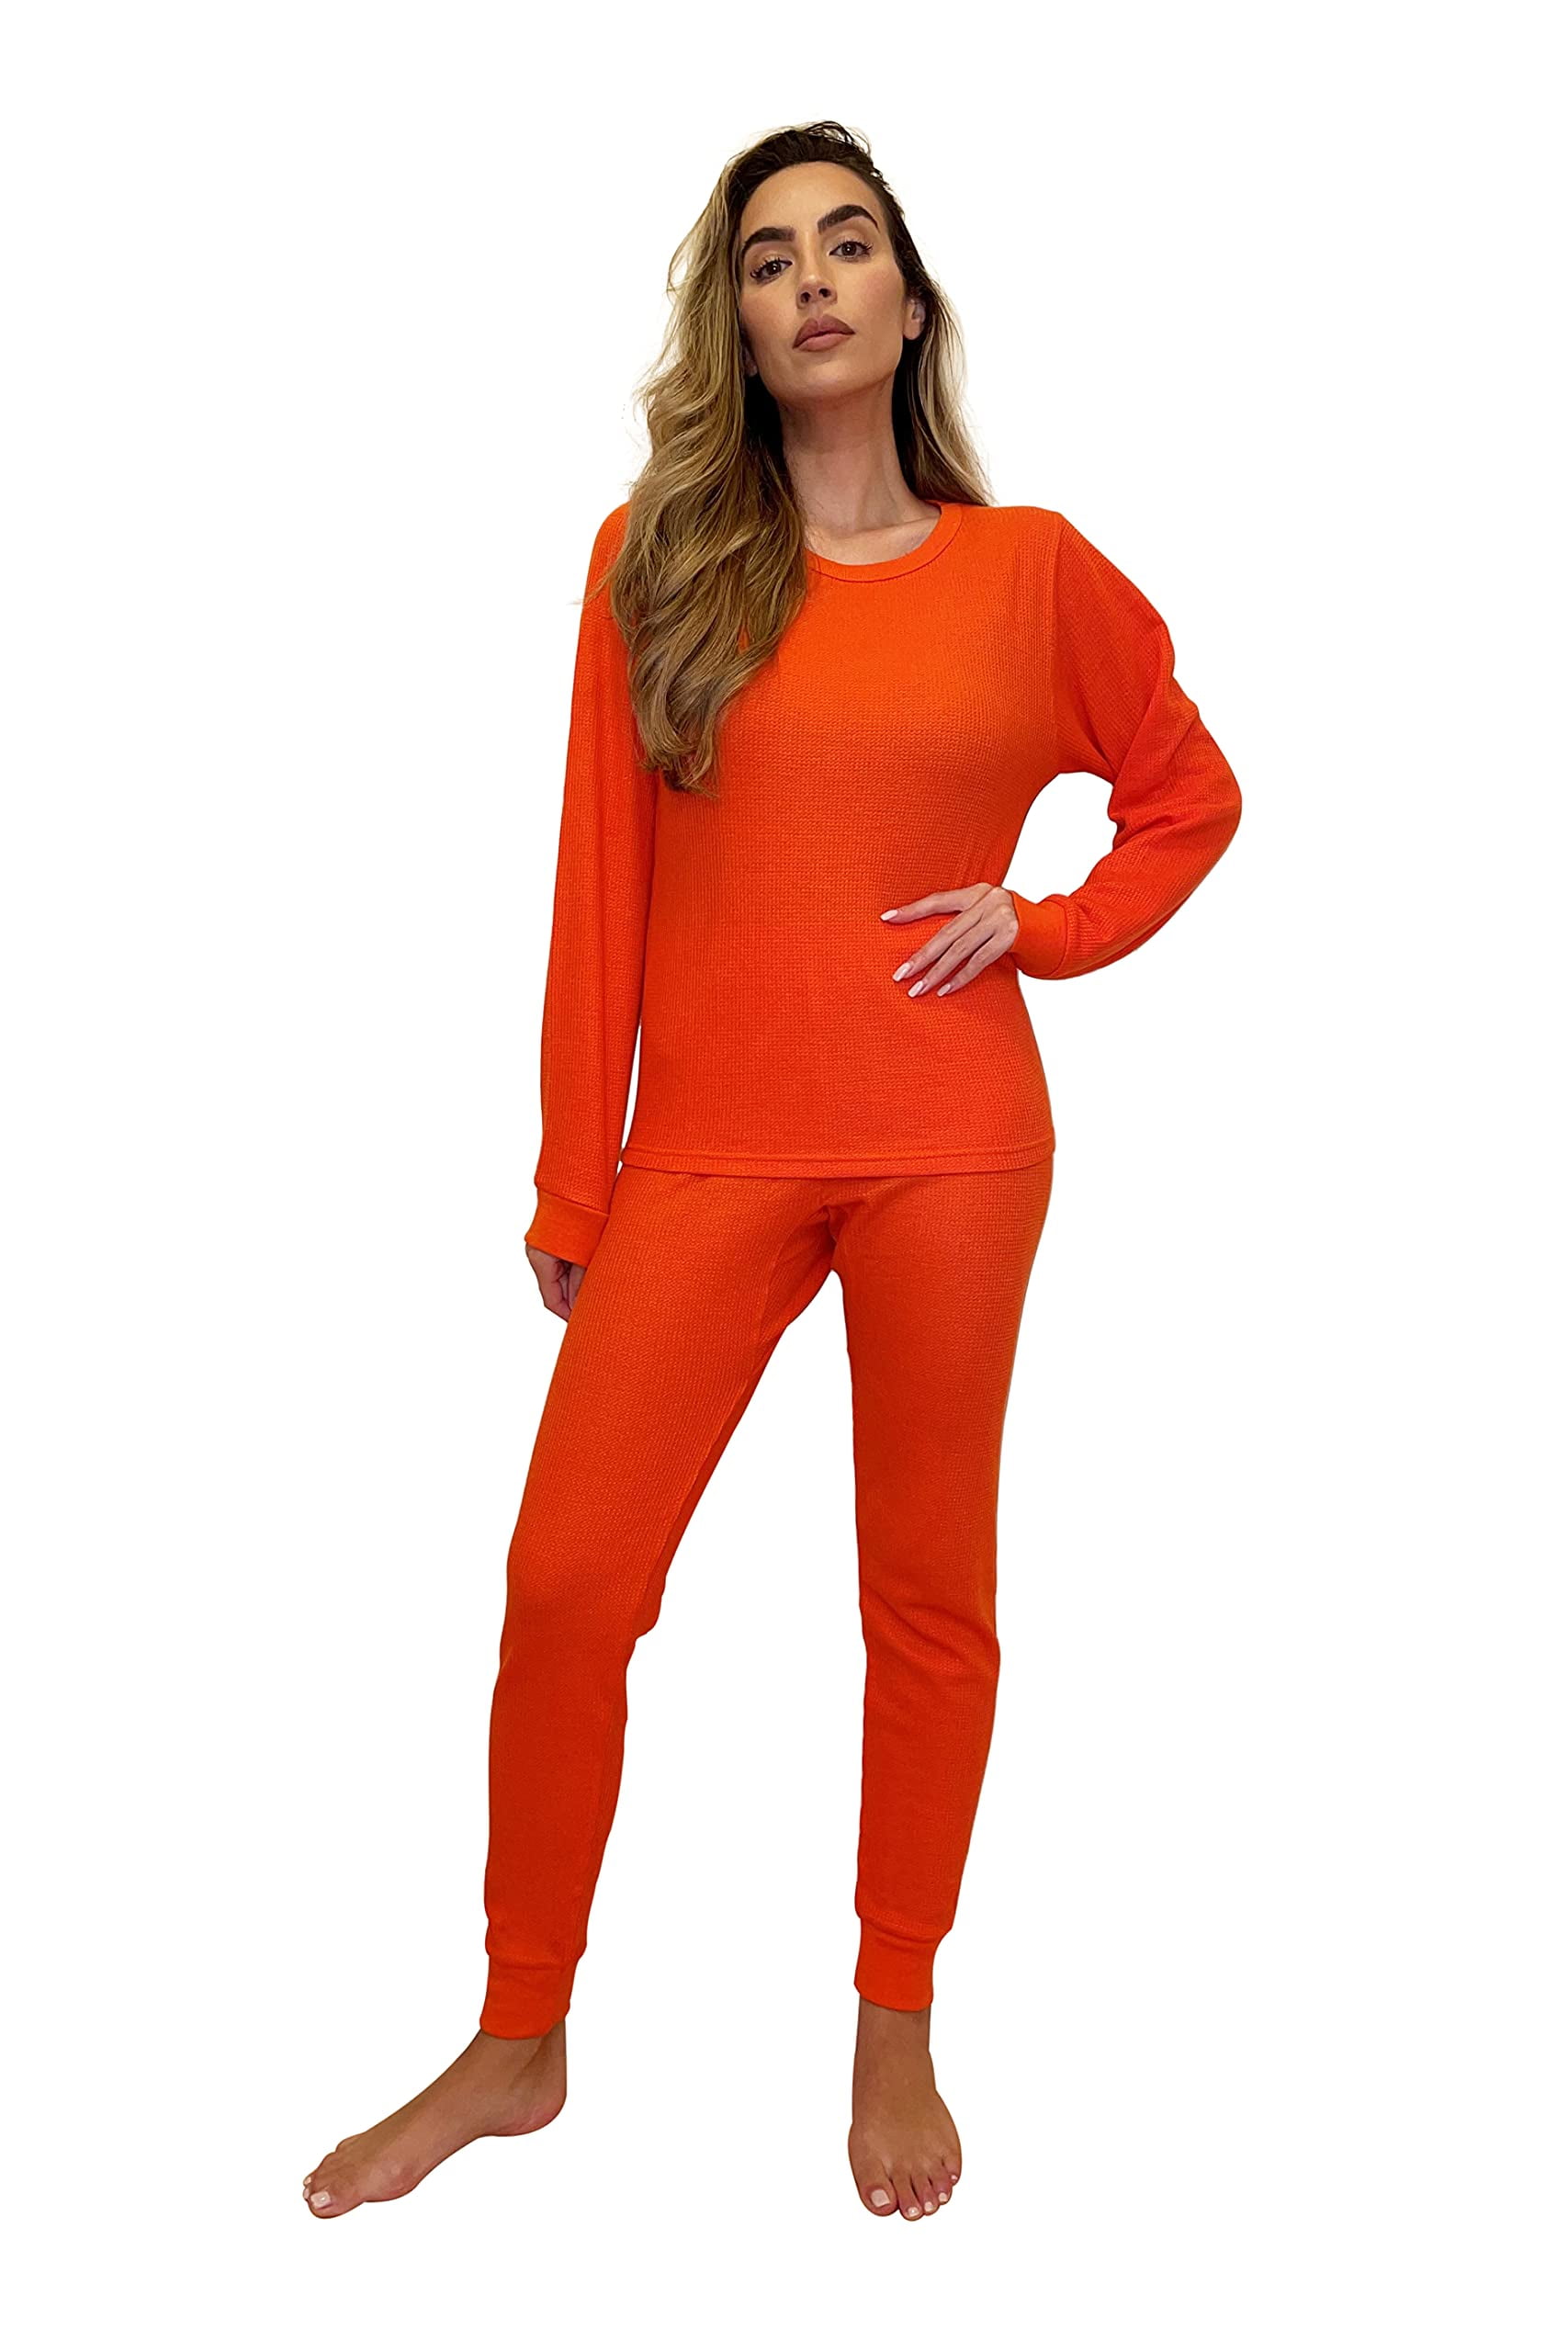 Just Love Women's Thermal Underwear Pajamas Set (Orange, 2X) 